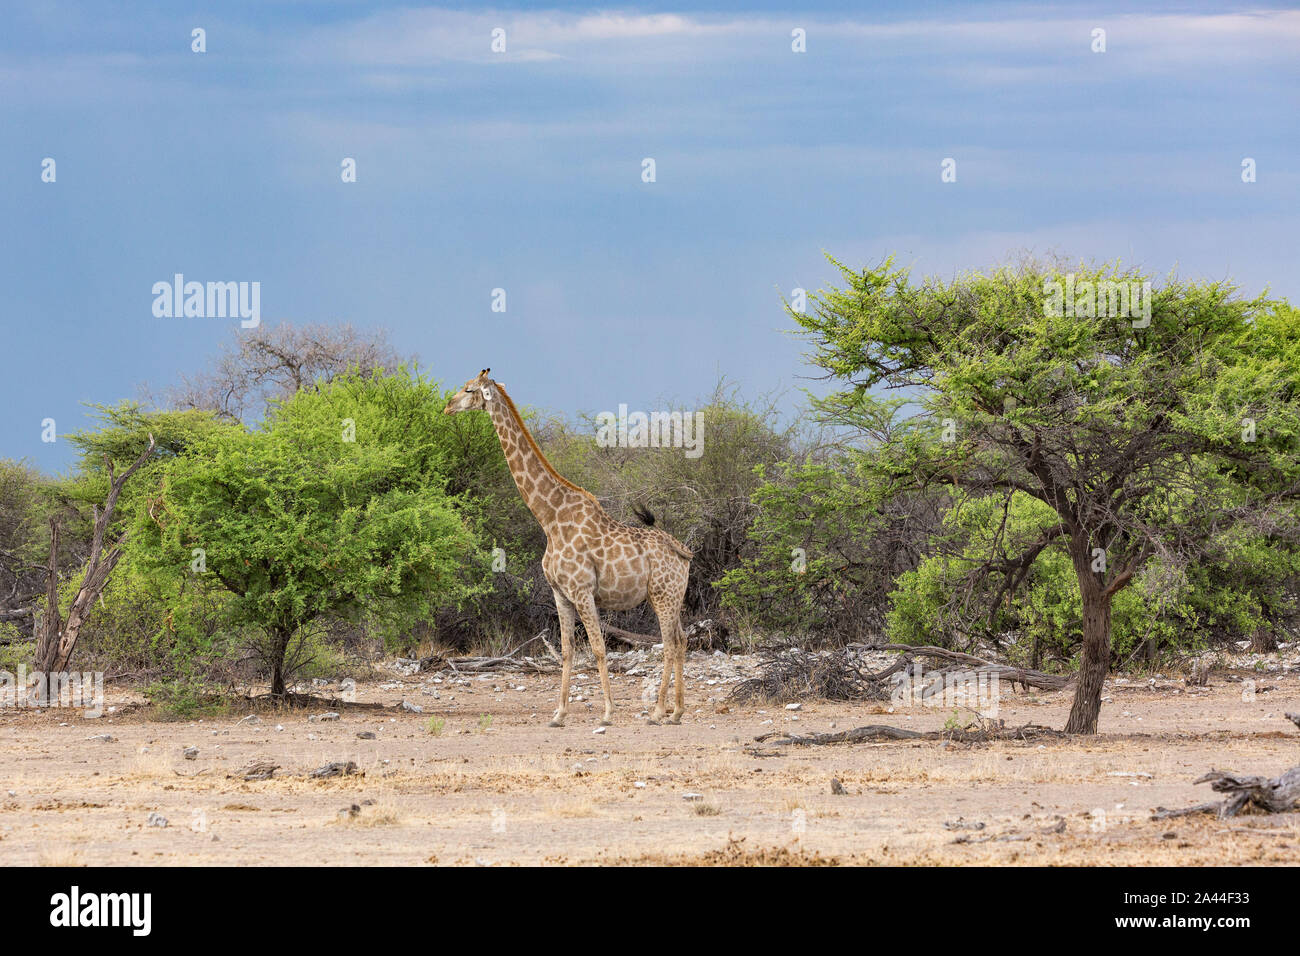 A giraffe enjoying delicious leaves, Etosha, Namibia, Africa Stock Photo